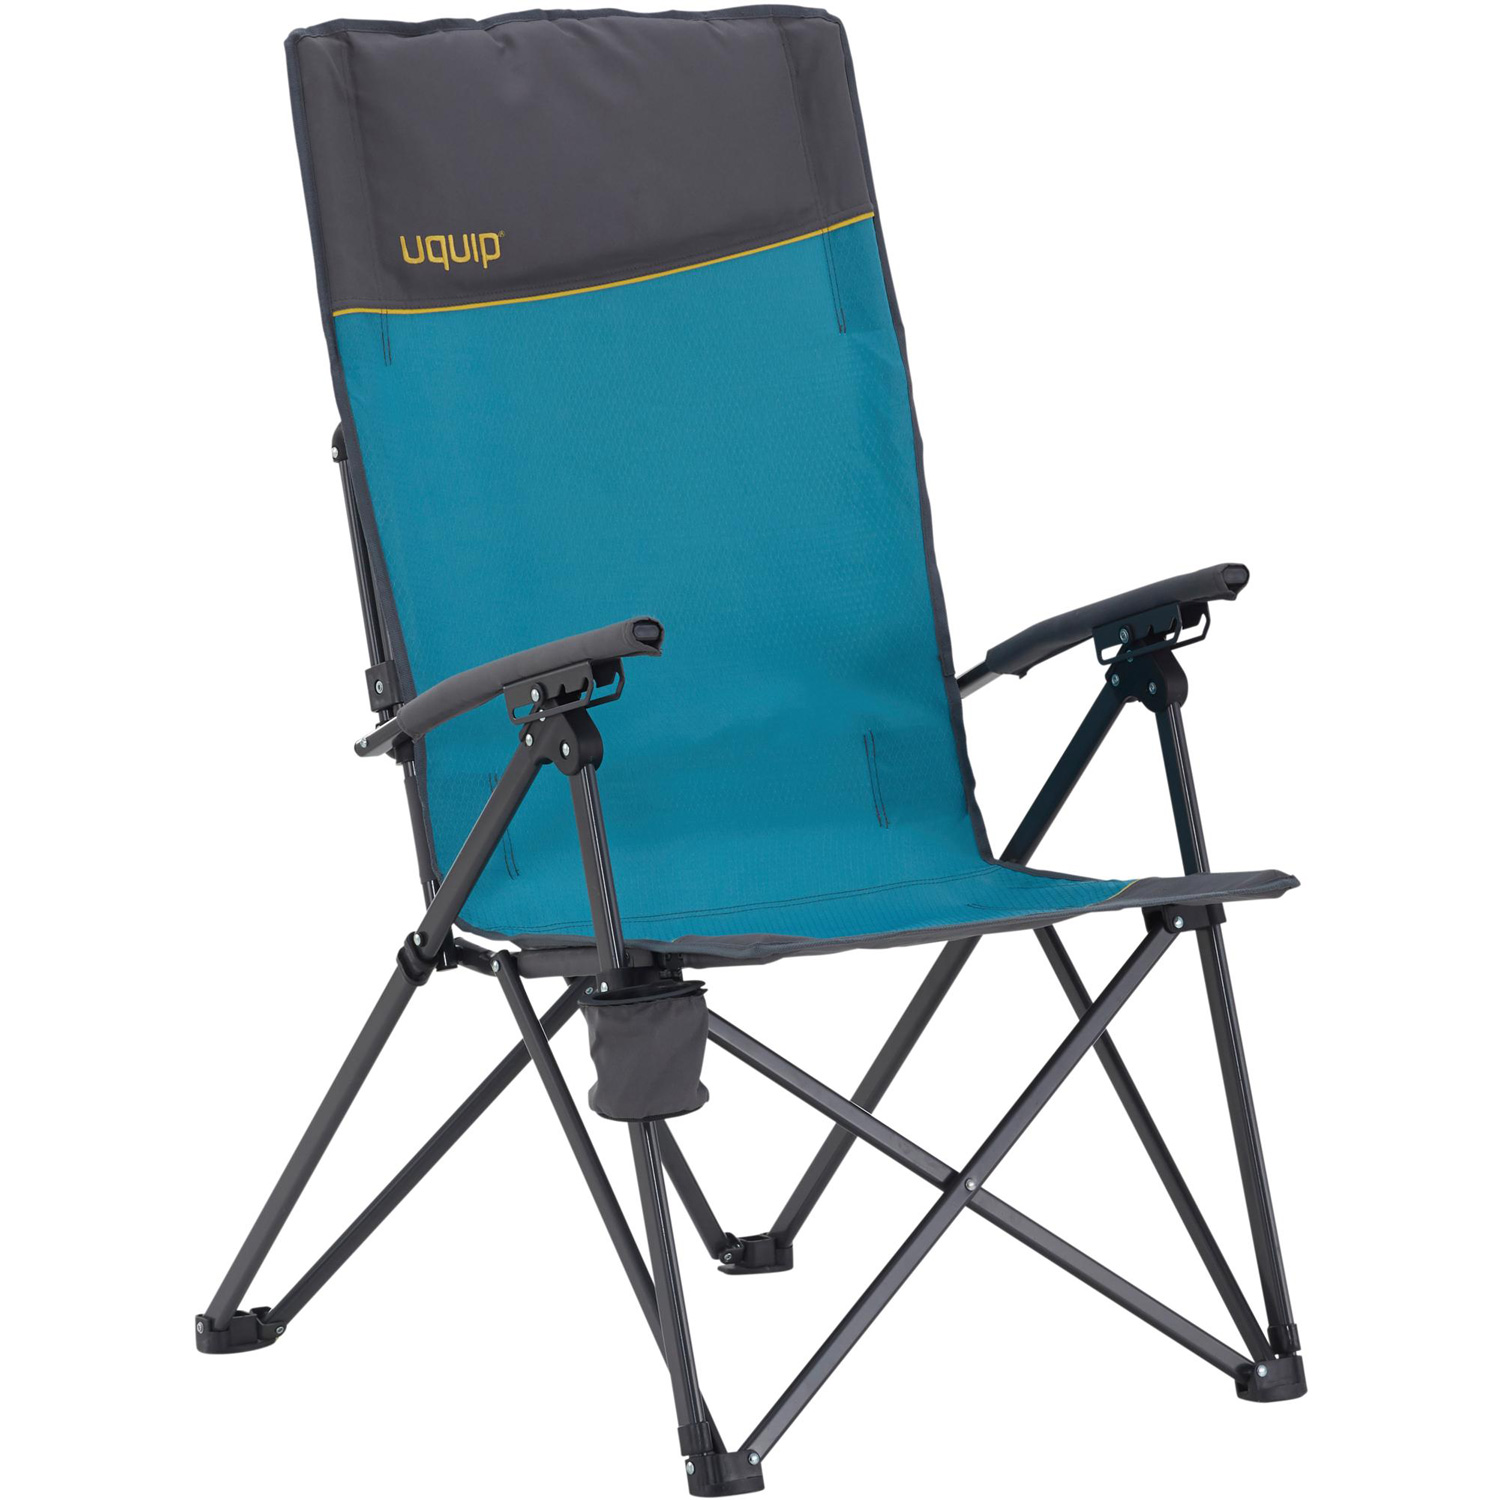 Productfoto van Uquip Becky Folding Chair - petrol/grey